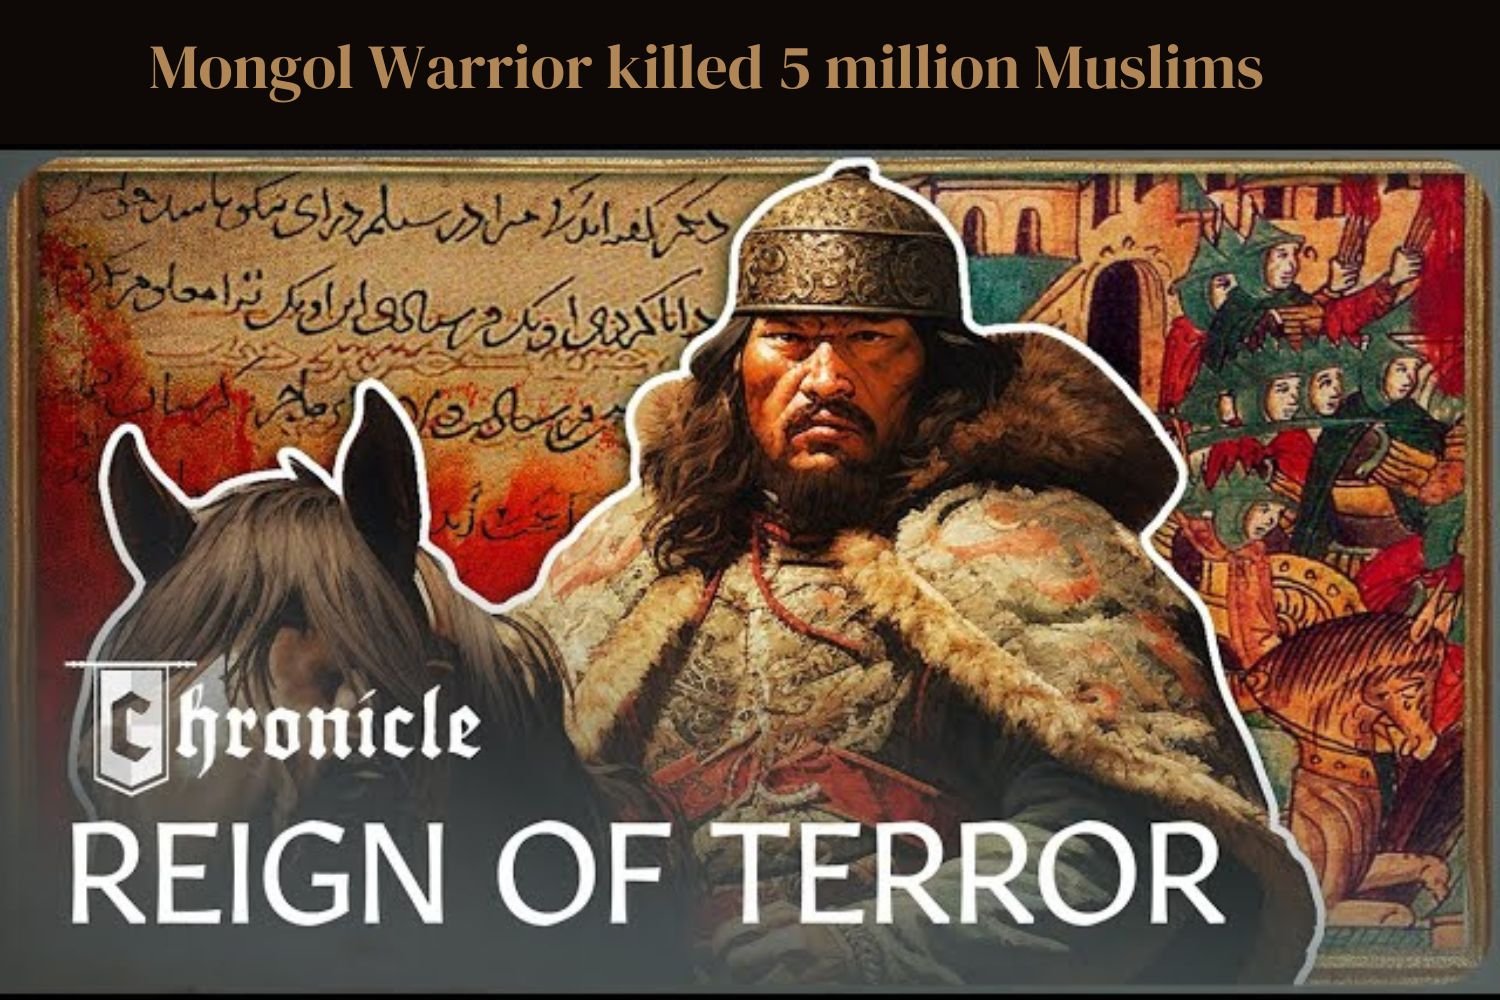 Mongol Warrio killed 5 million Muslims